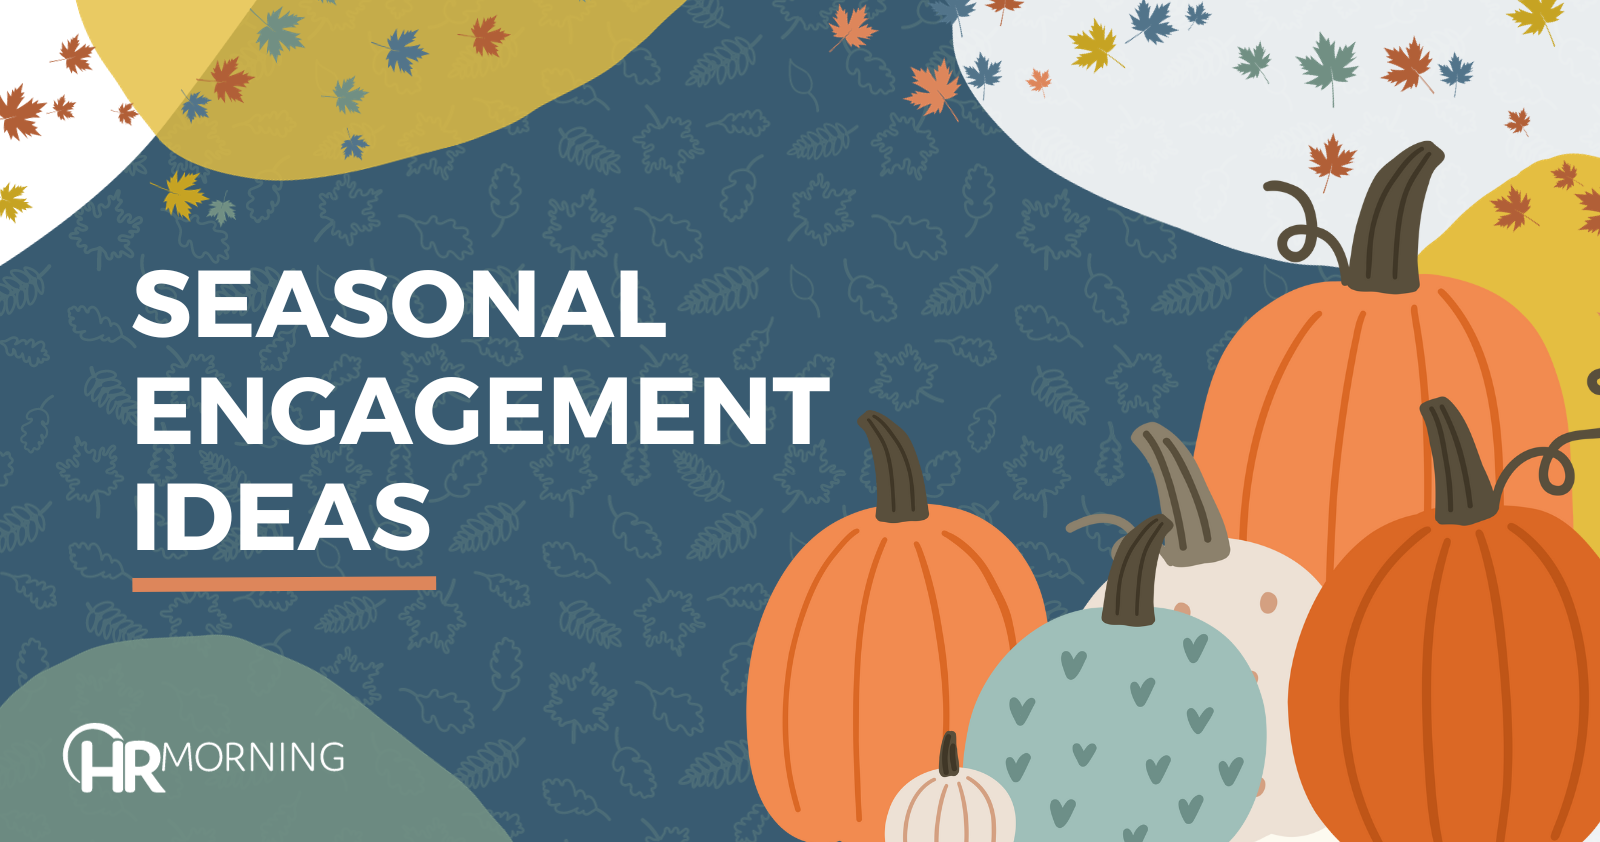 Seasonal fall team-building engagement ideas